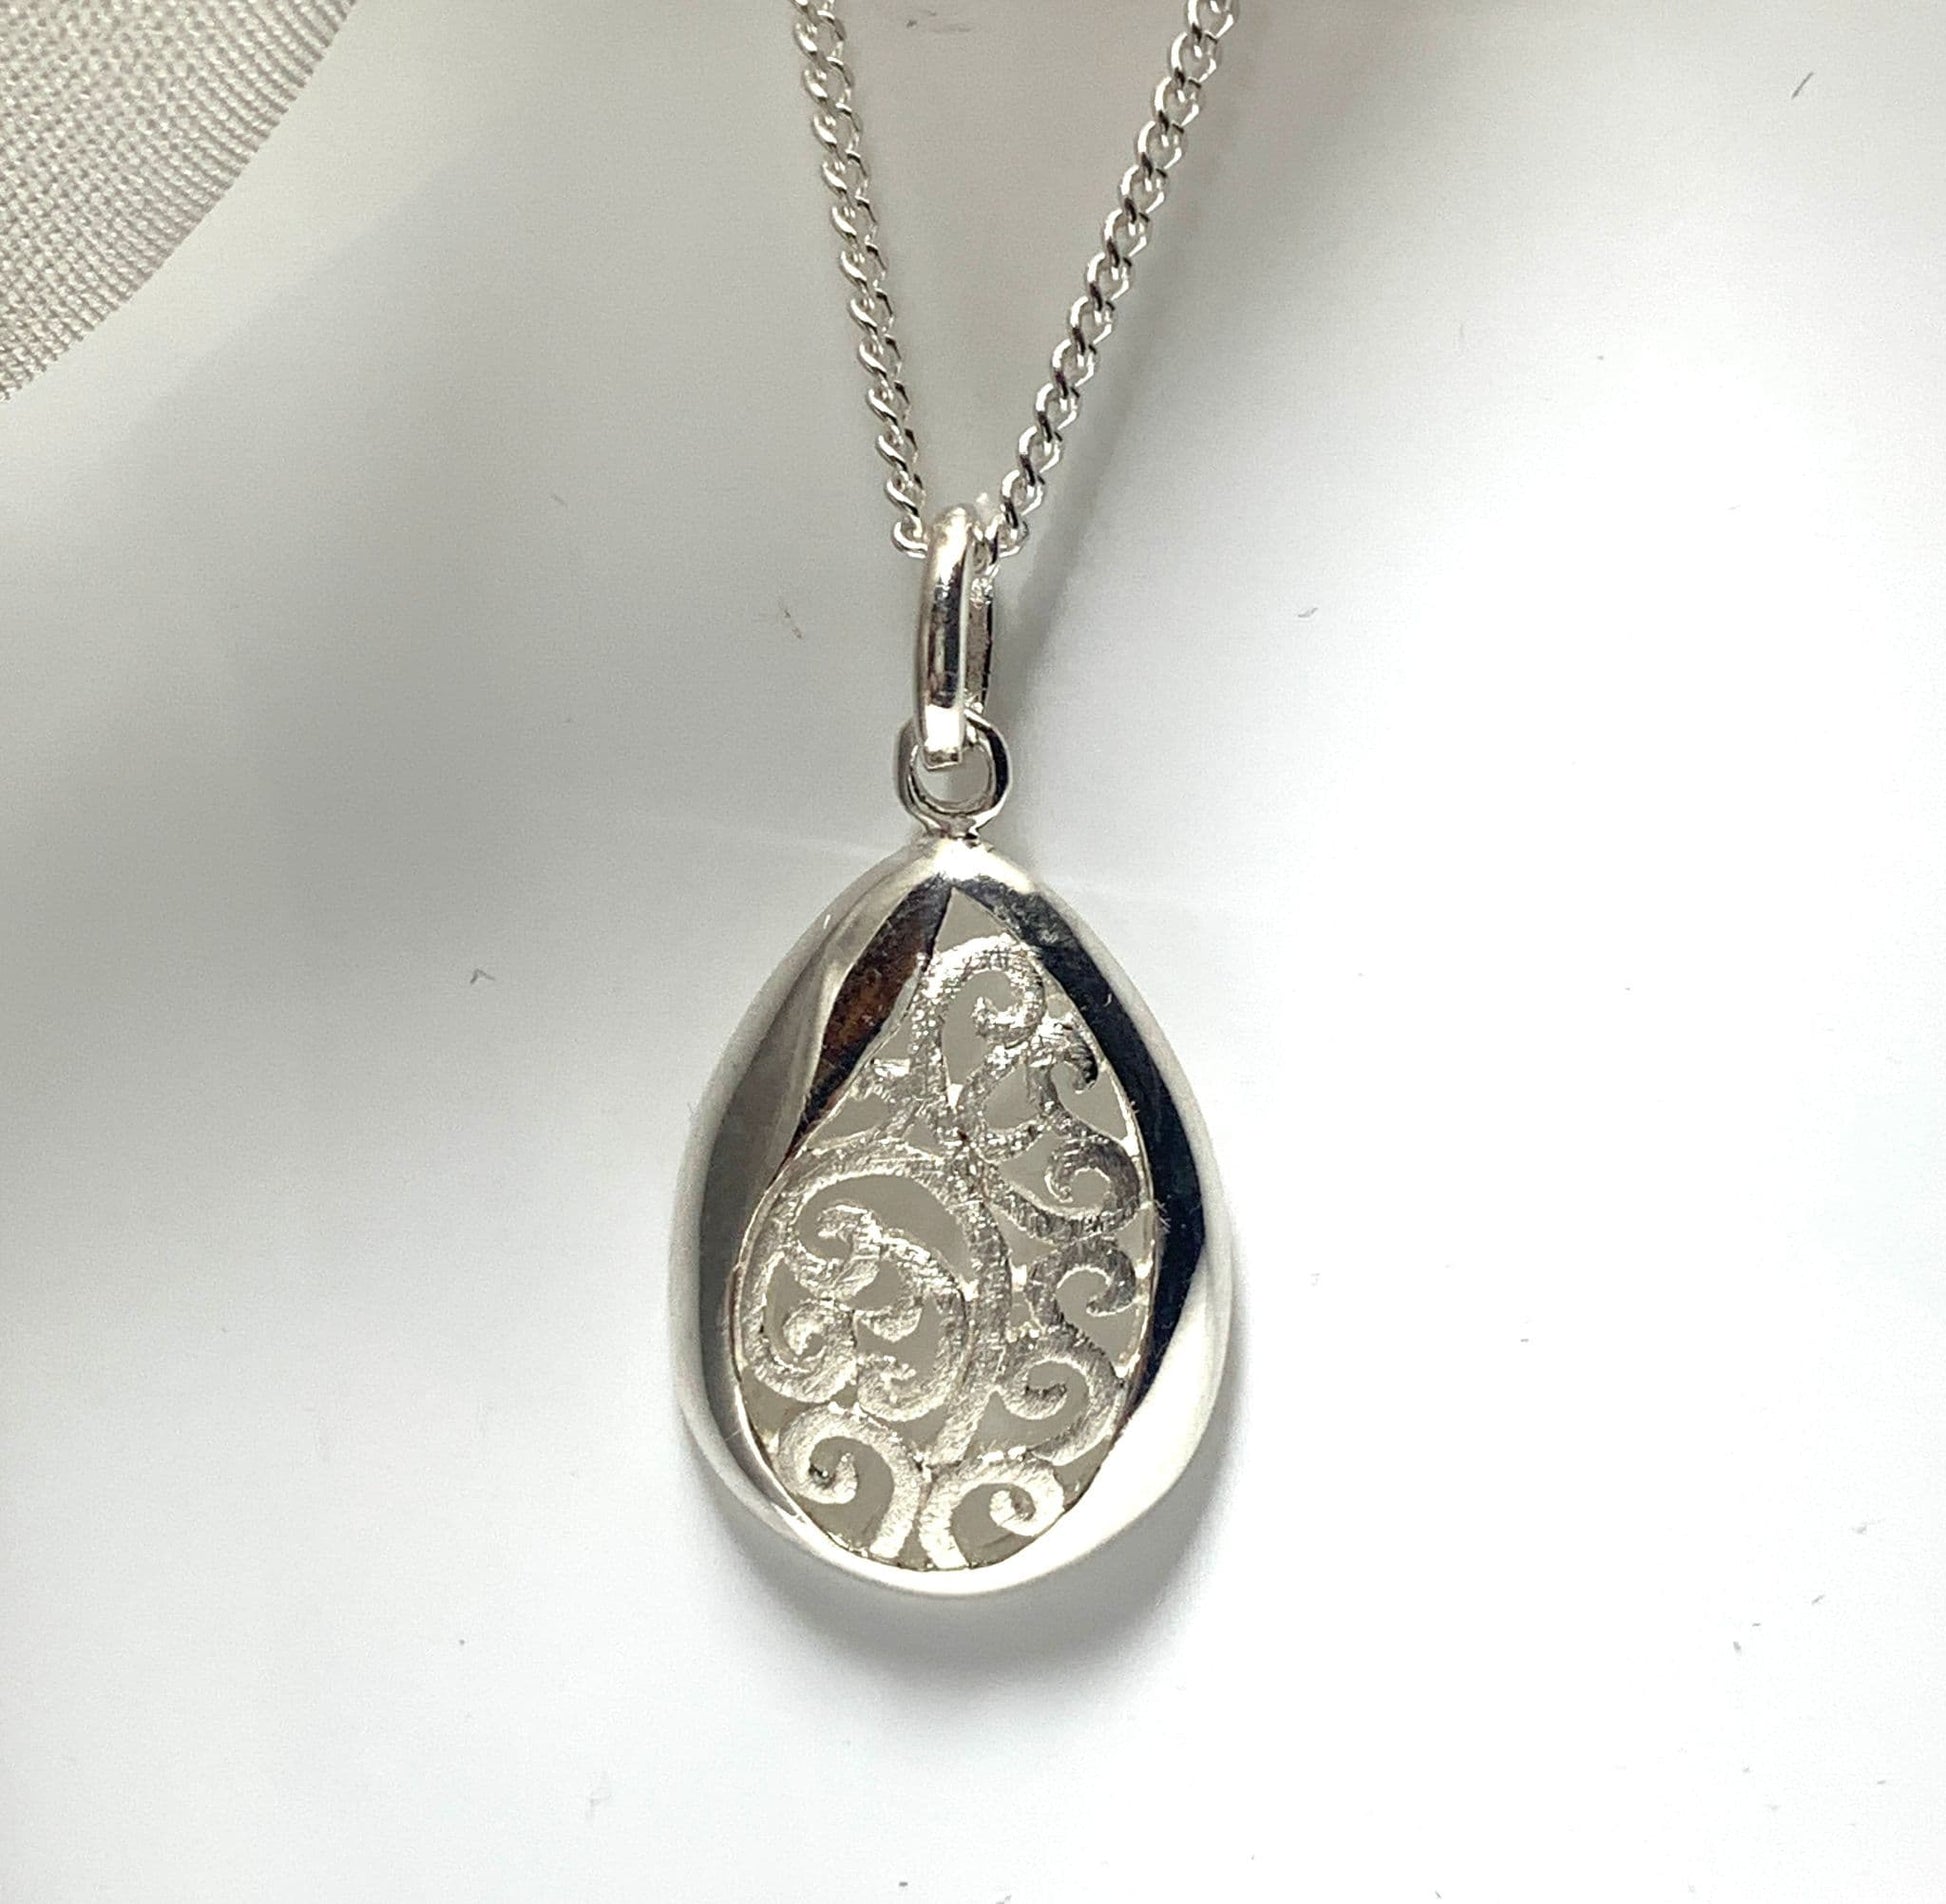 Pear shaped filigree teardrop sterling silver necklace pendant